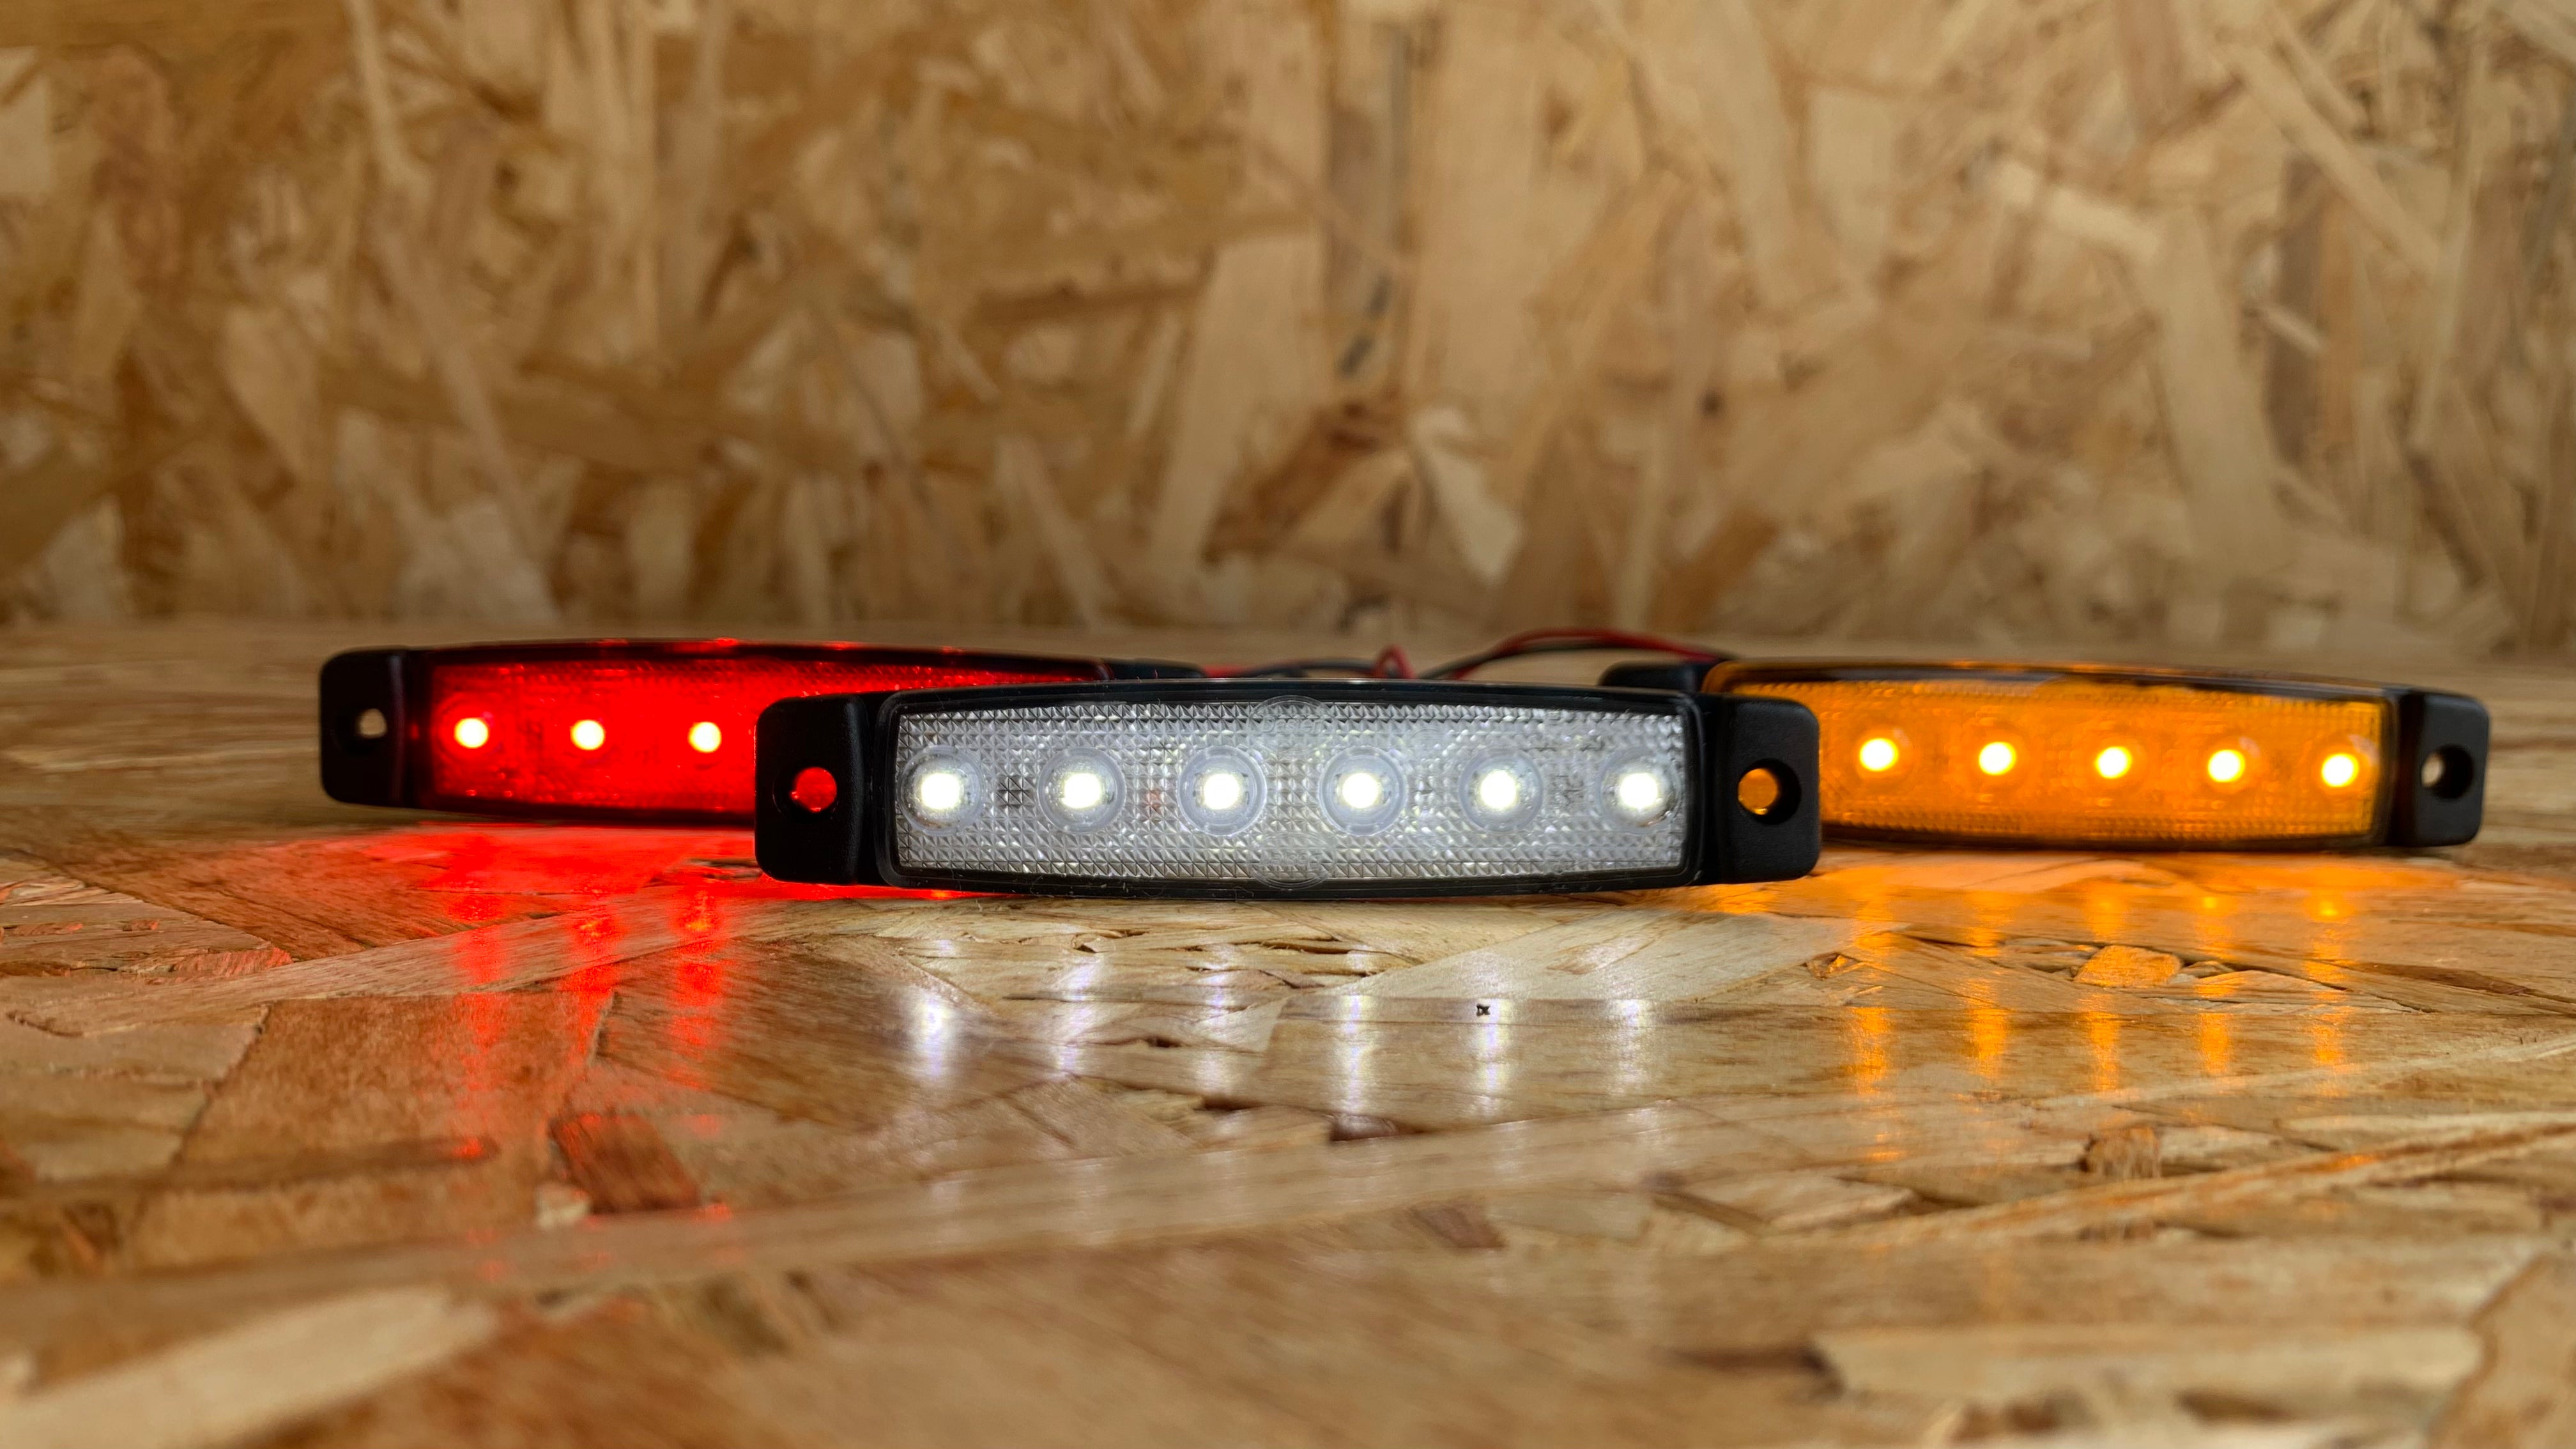 Hvid Slimline LED-markeringslampe foran til lastbiler - Markeringslygter foran og bagpå - spo-cs-deaktiveret - spo-default - spo-disa